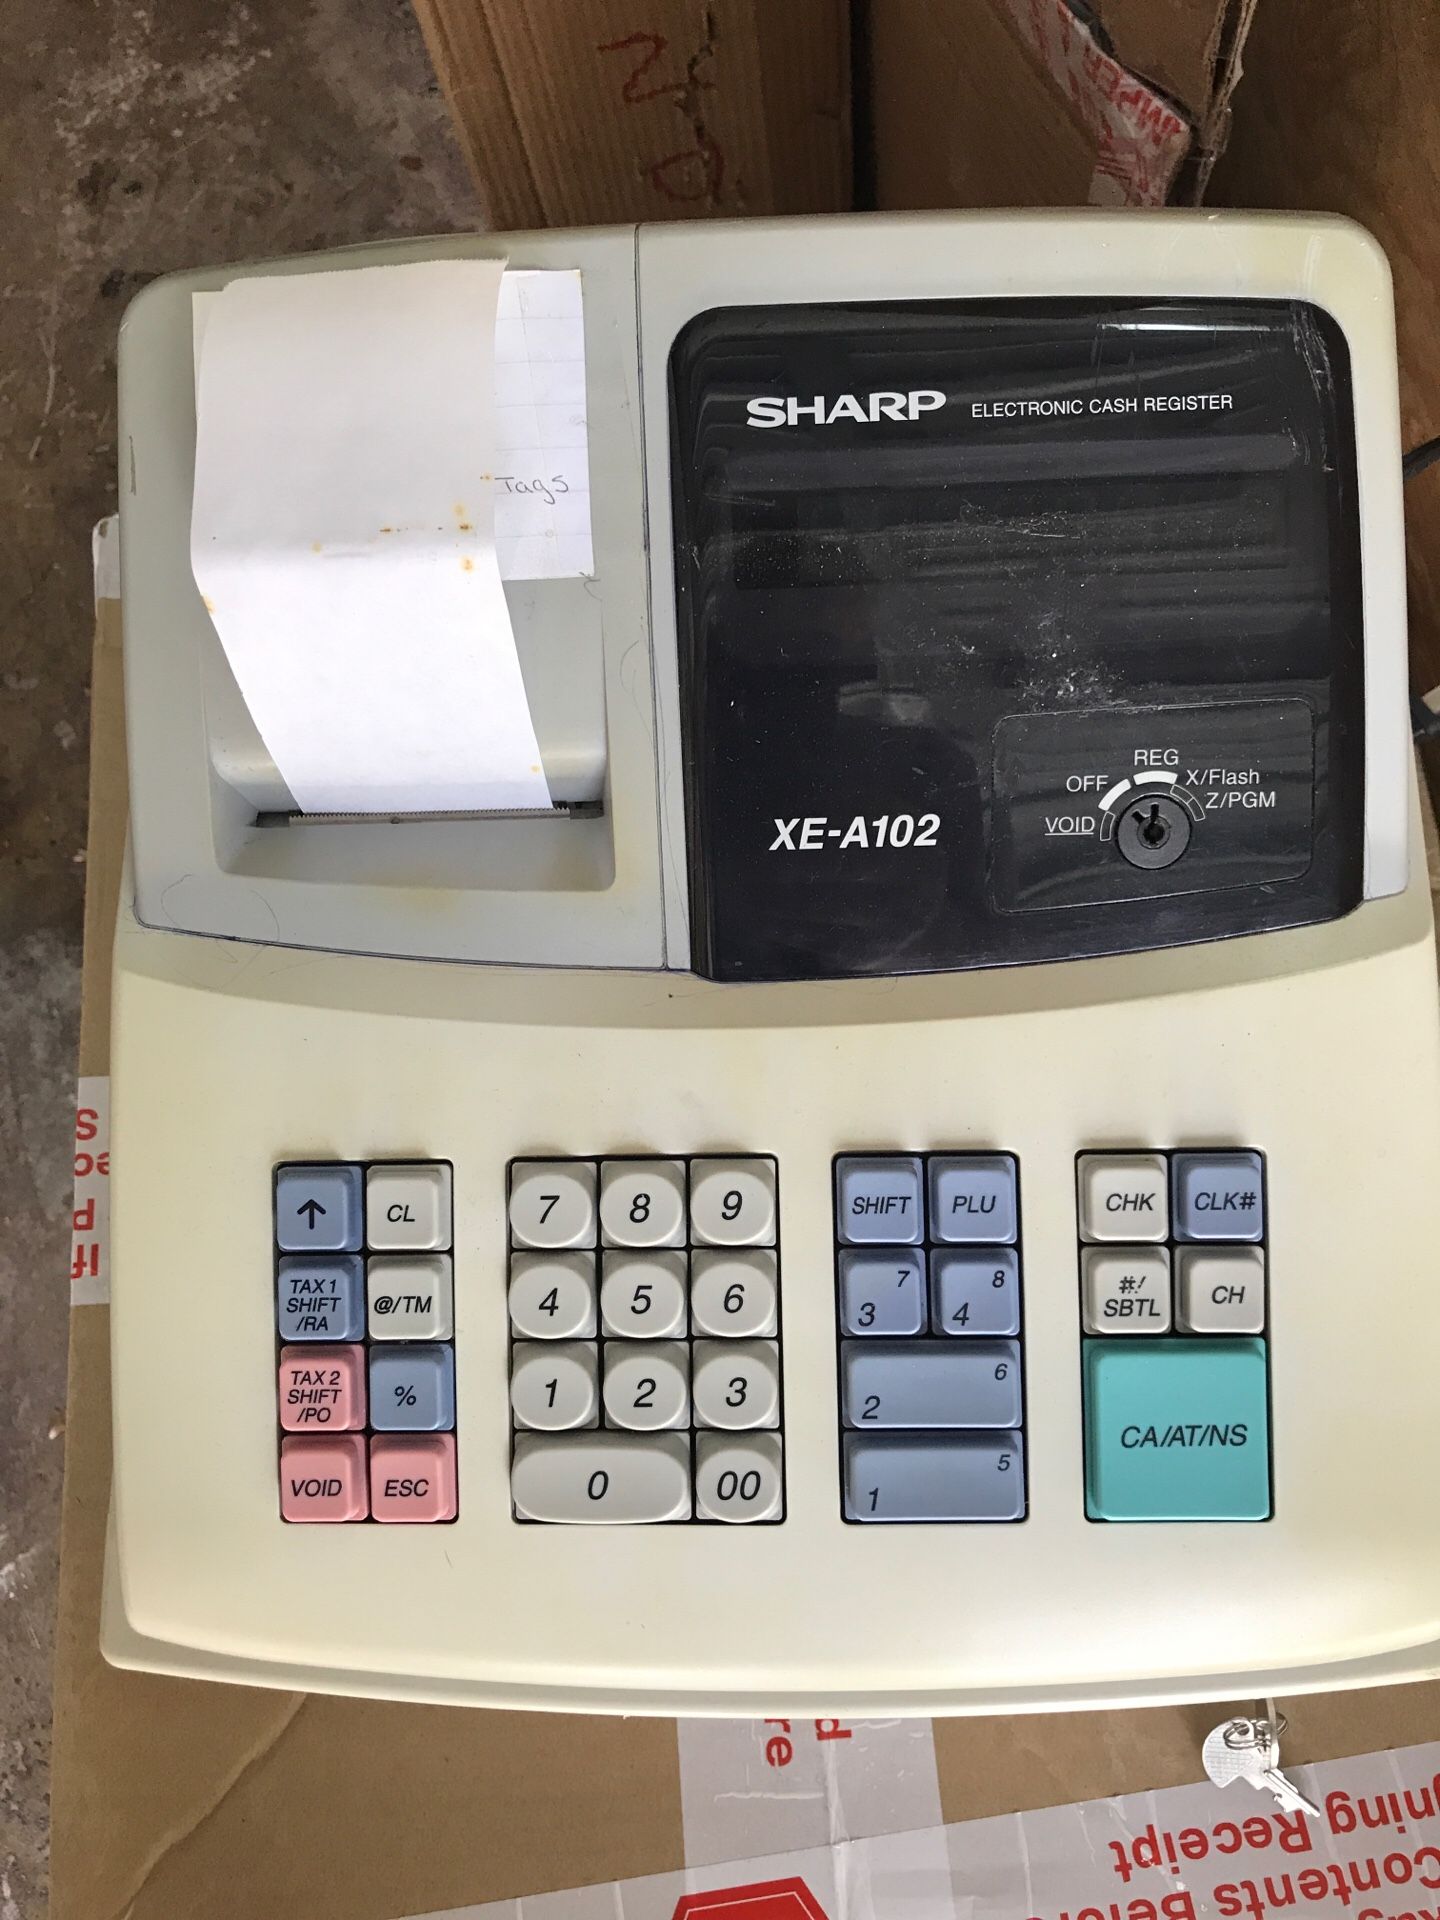 Sharp electronic cash register XE-A102